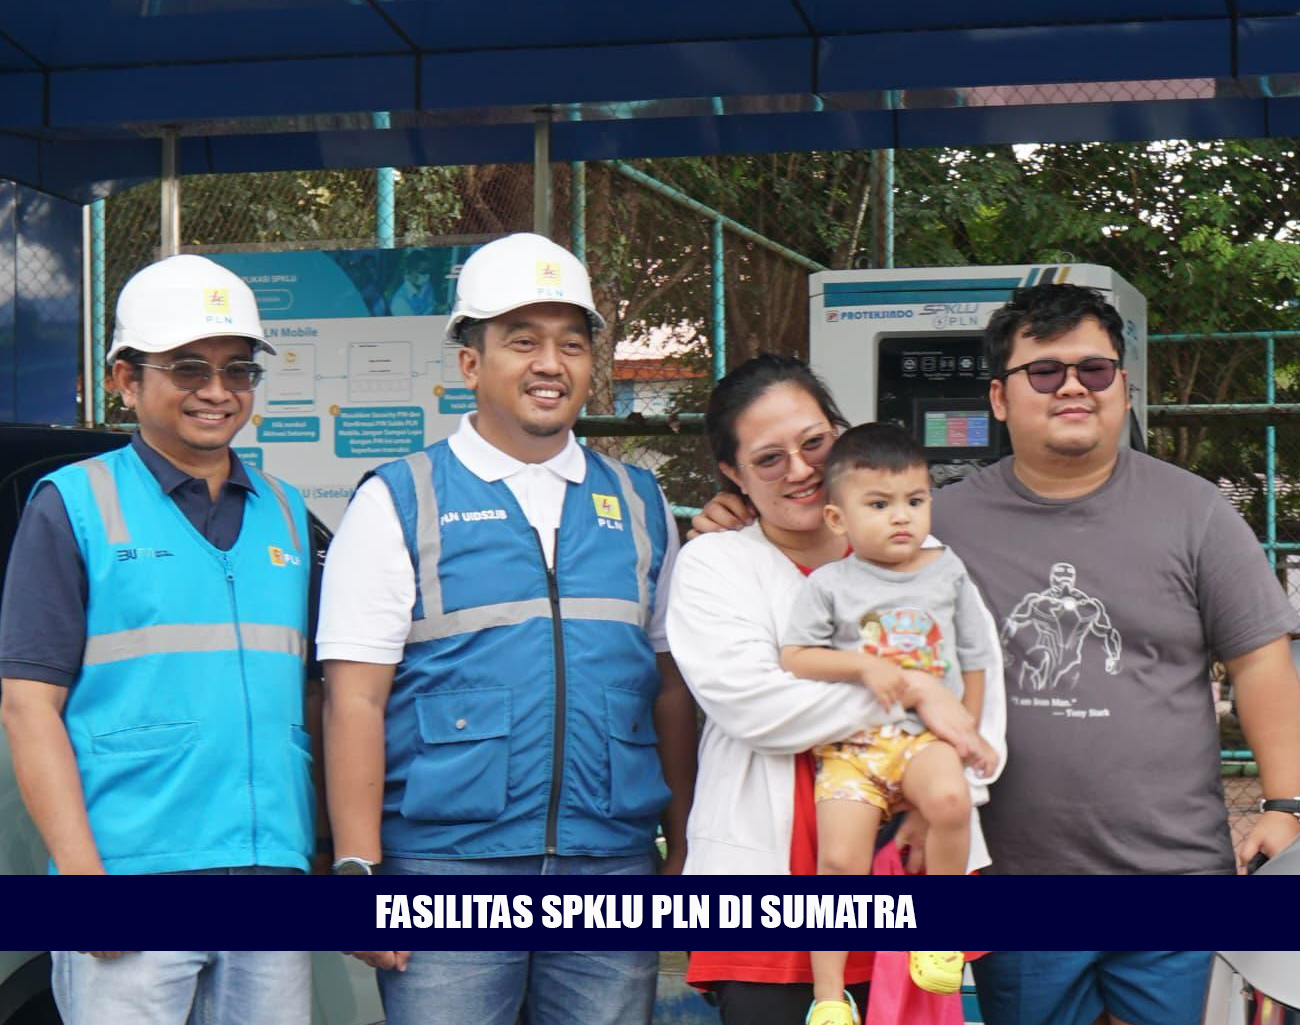 Fasilitas SPKLU PLN di Sumatra Mendapat Sambutan Positif, Dukung Kelancaran Arus Mudik